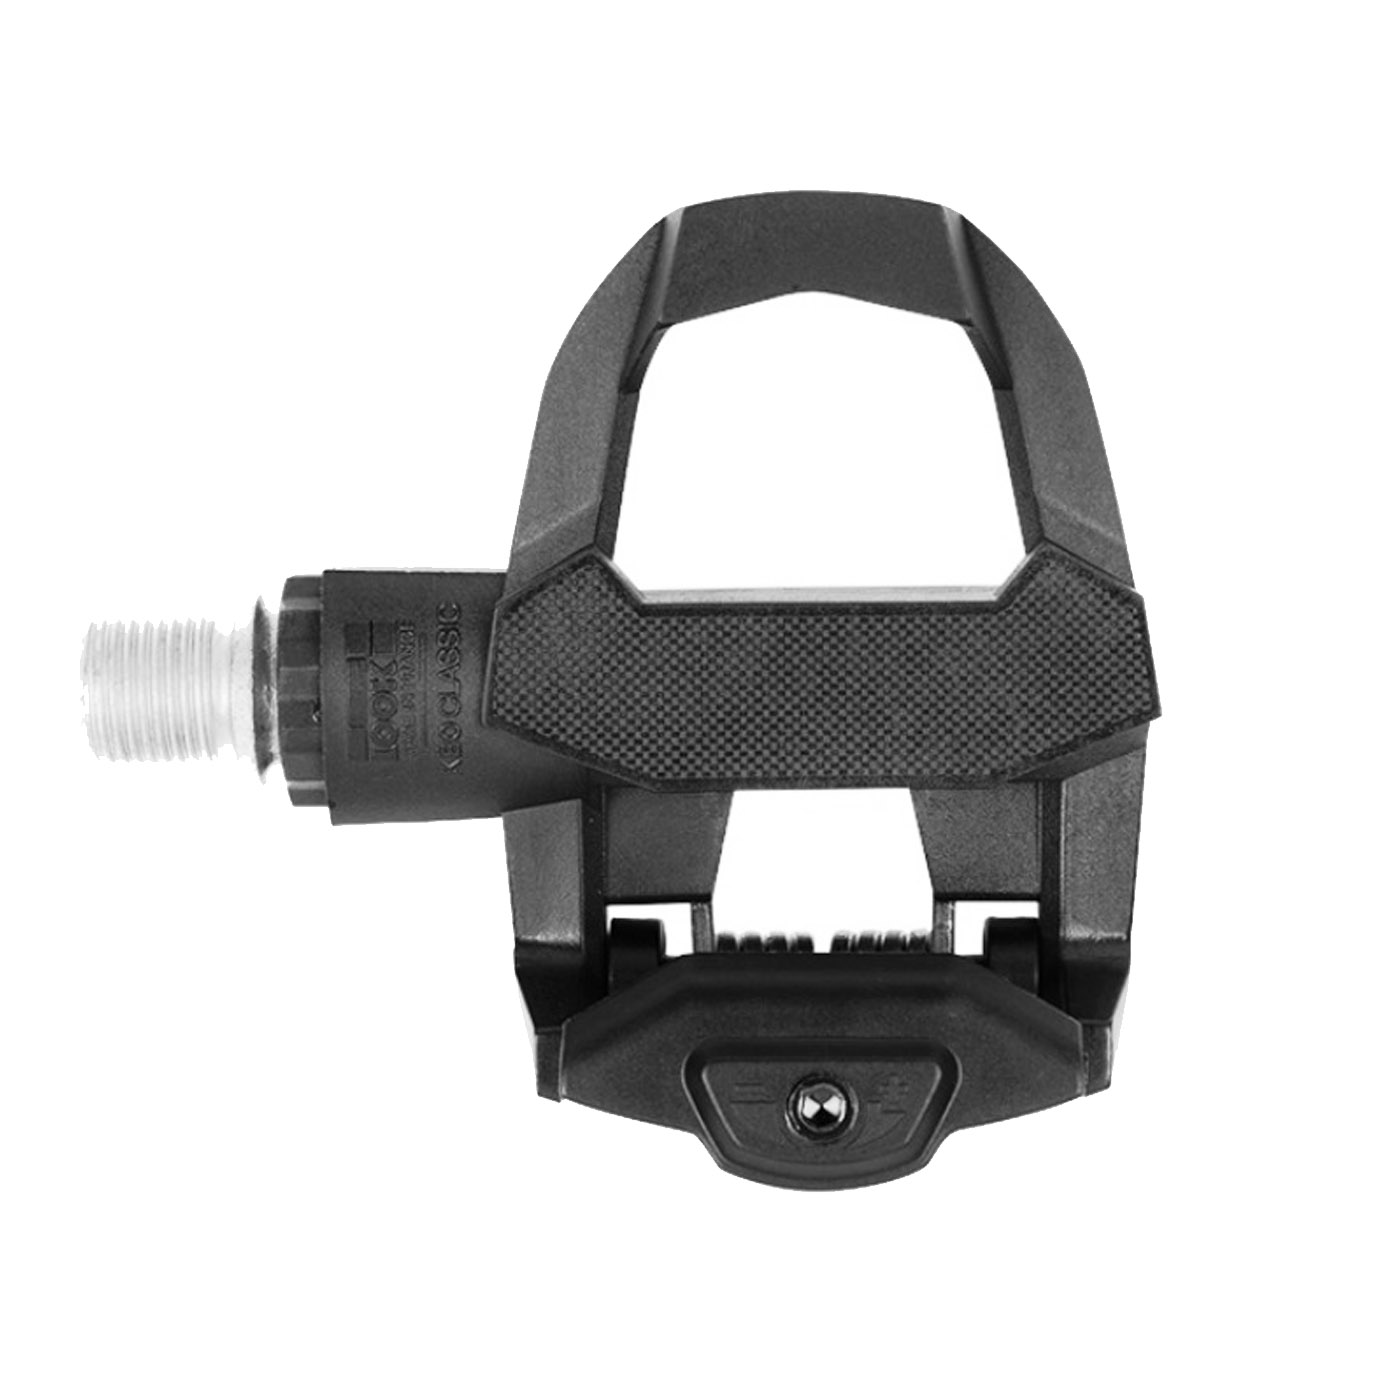 Pedal LOOK Ruta KEO CLASSIC 3 Contacto Composite/CrMo Negro + Placas (00014260)